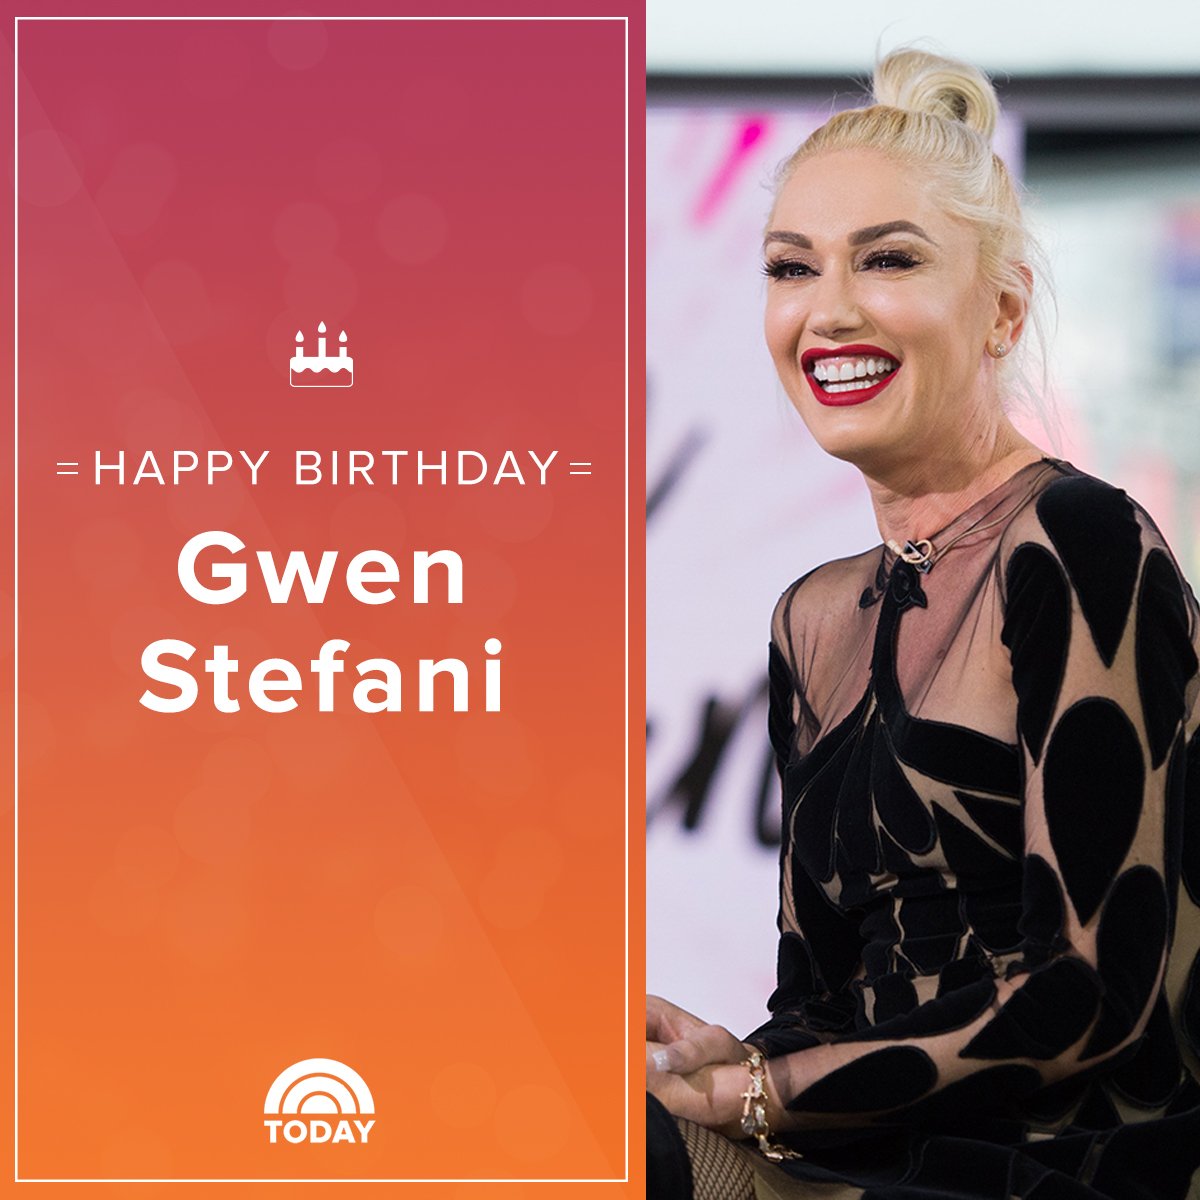 Happy birthday, Gwen Stefani! 